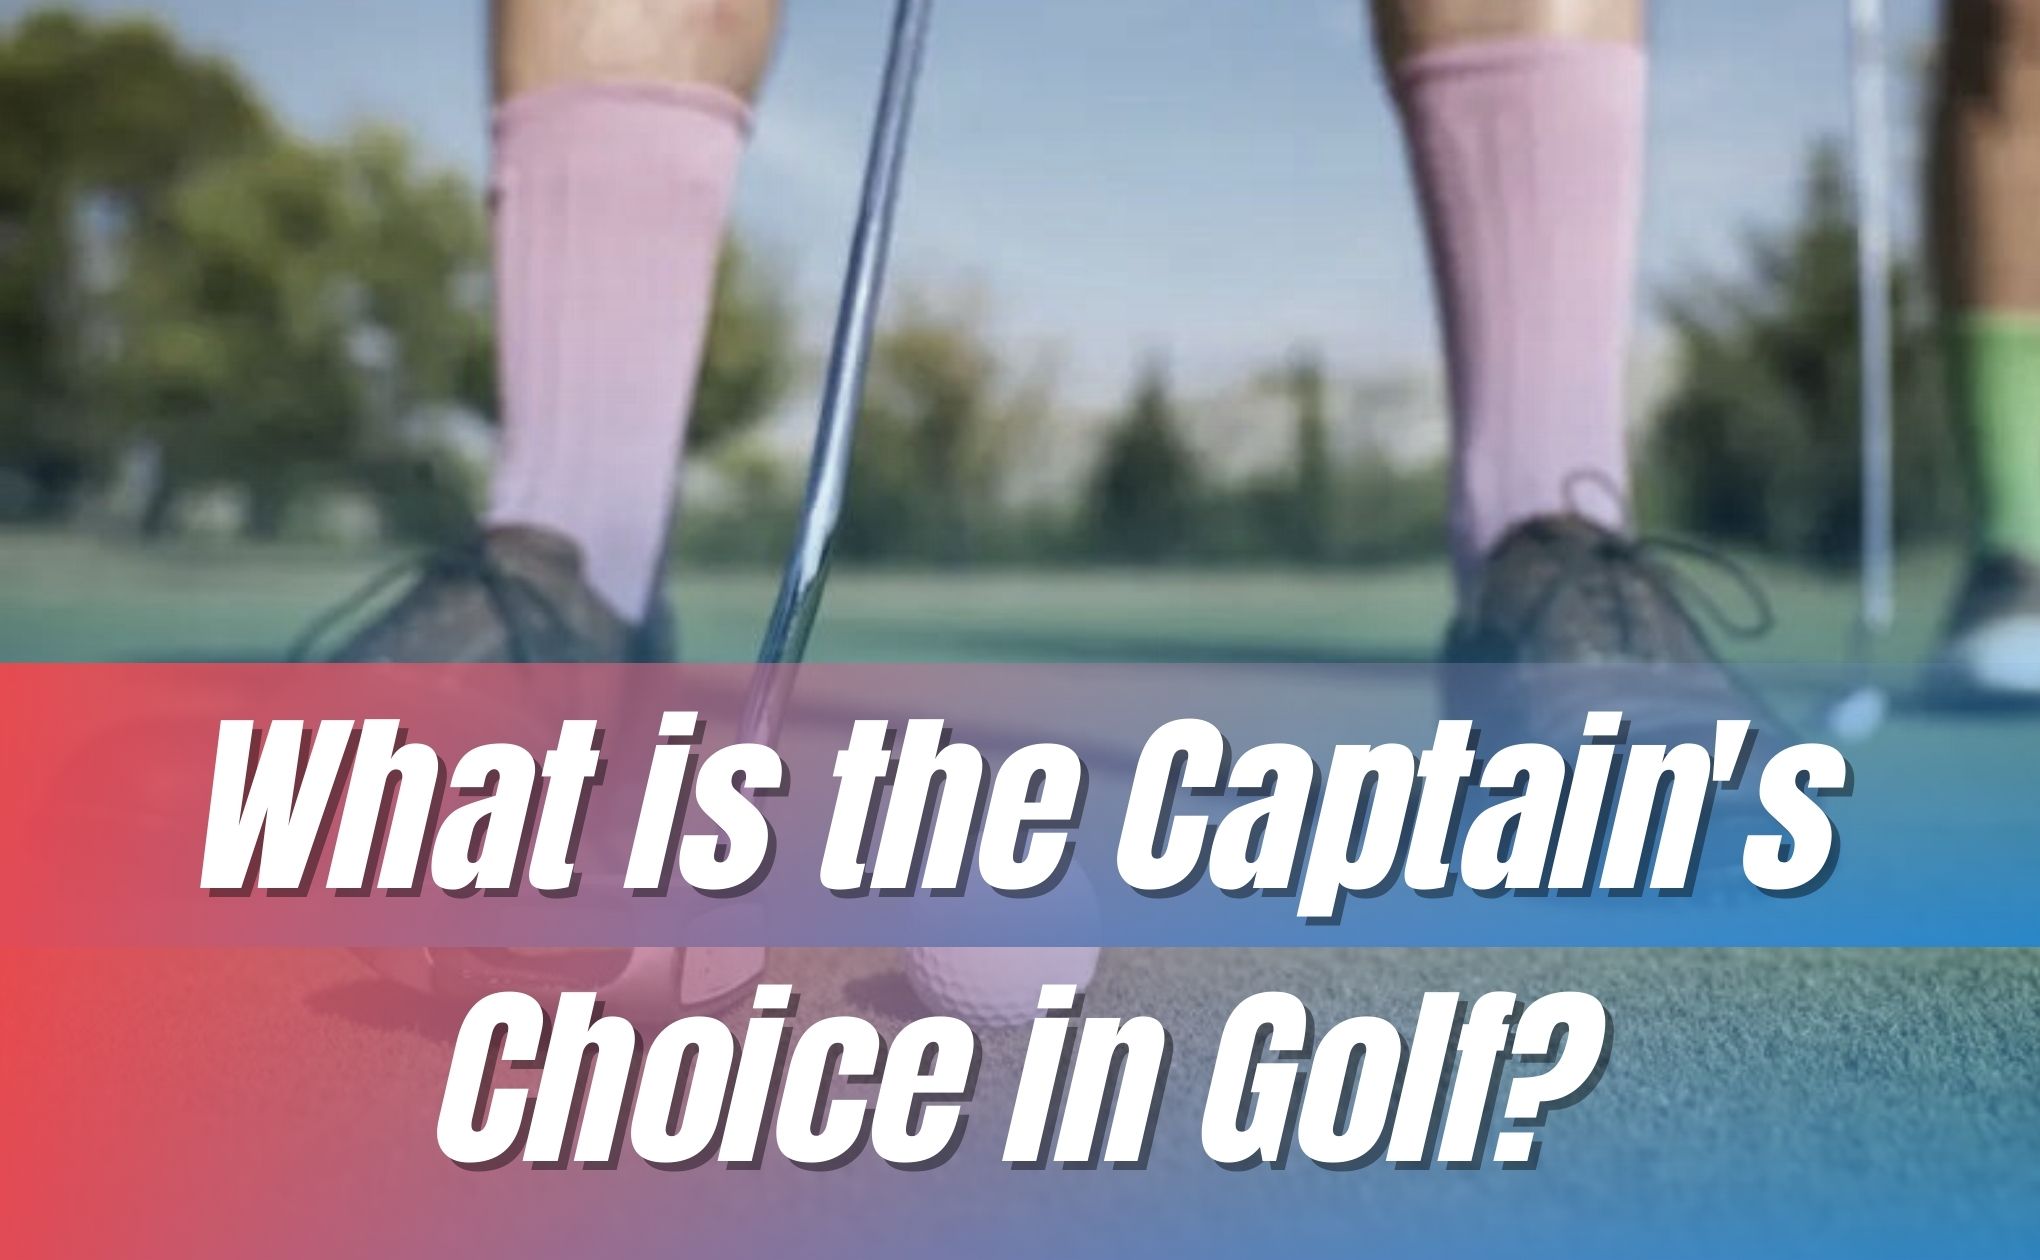 Captain's Choice in Golf